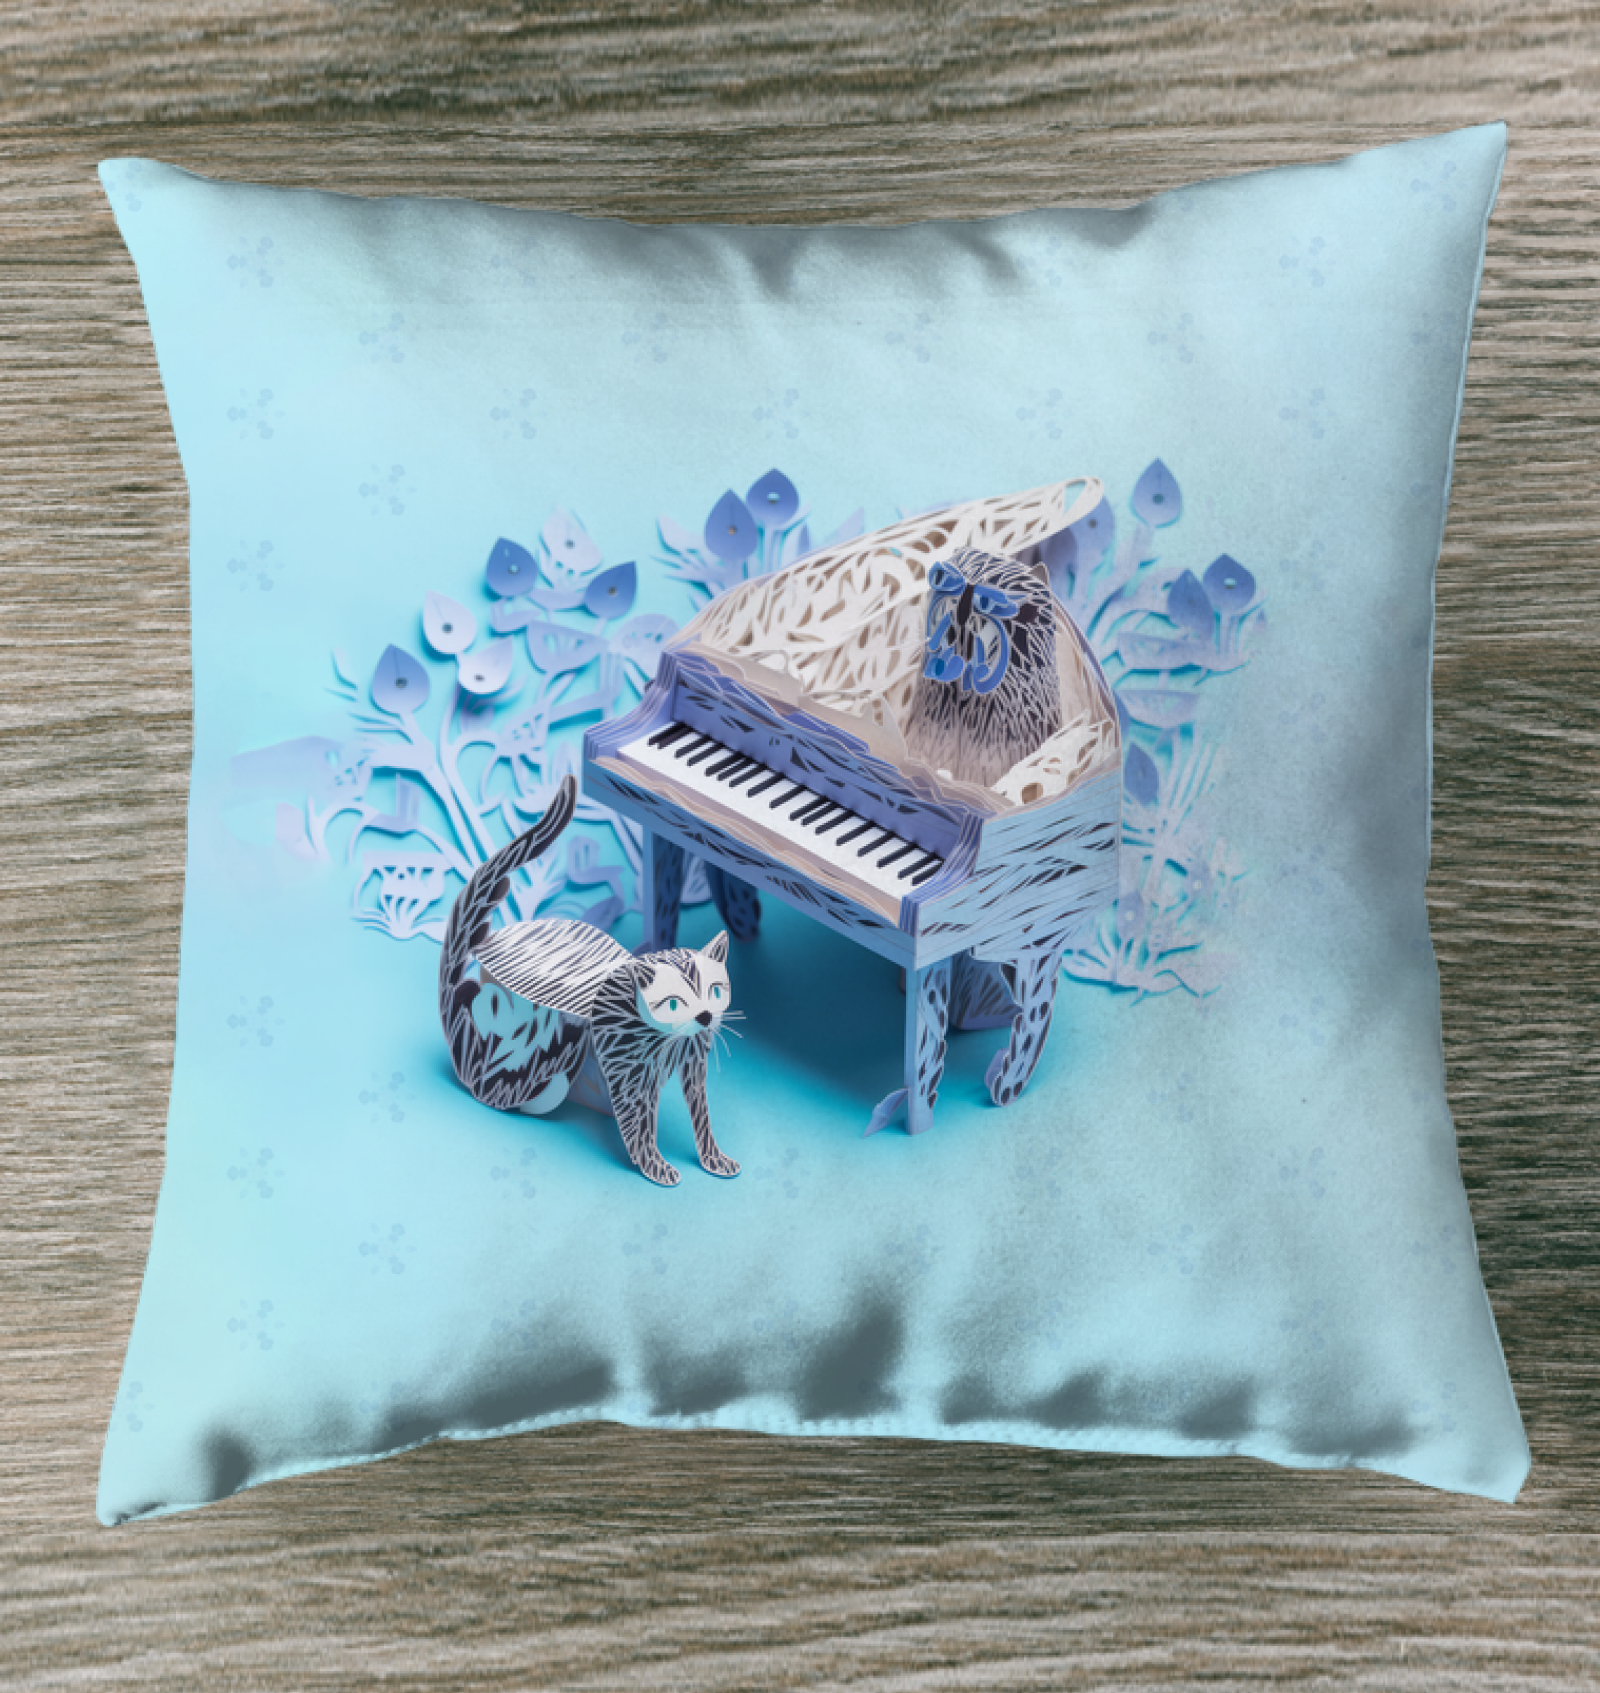 Indoor pillow with Kirigami Blossoming Garden design.